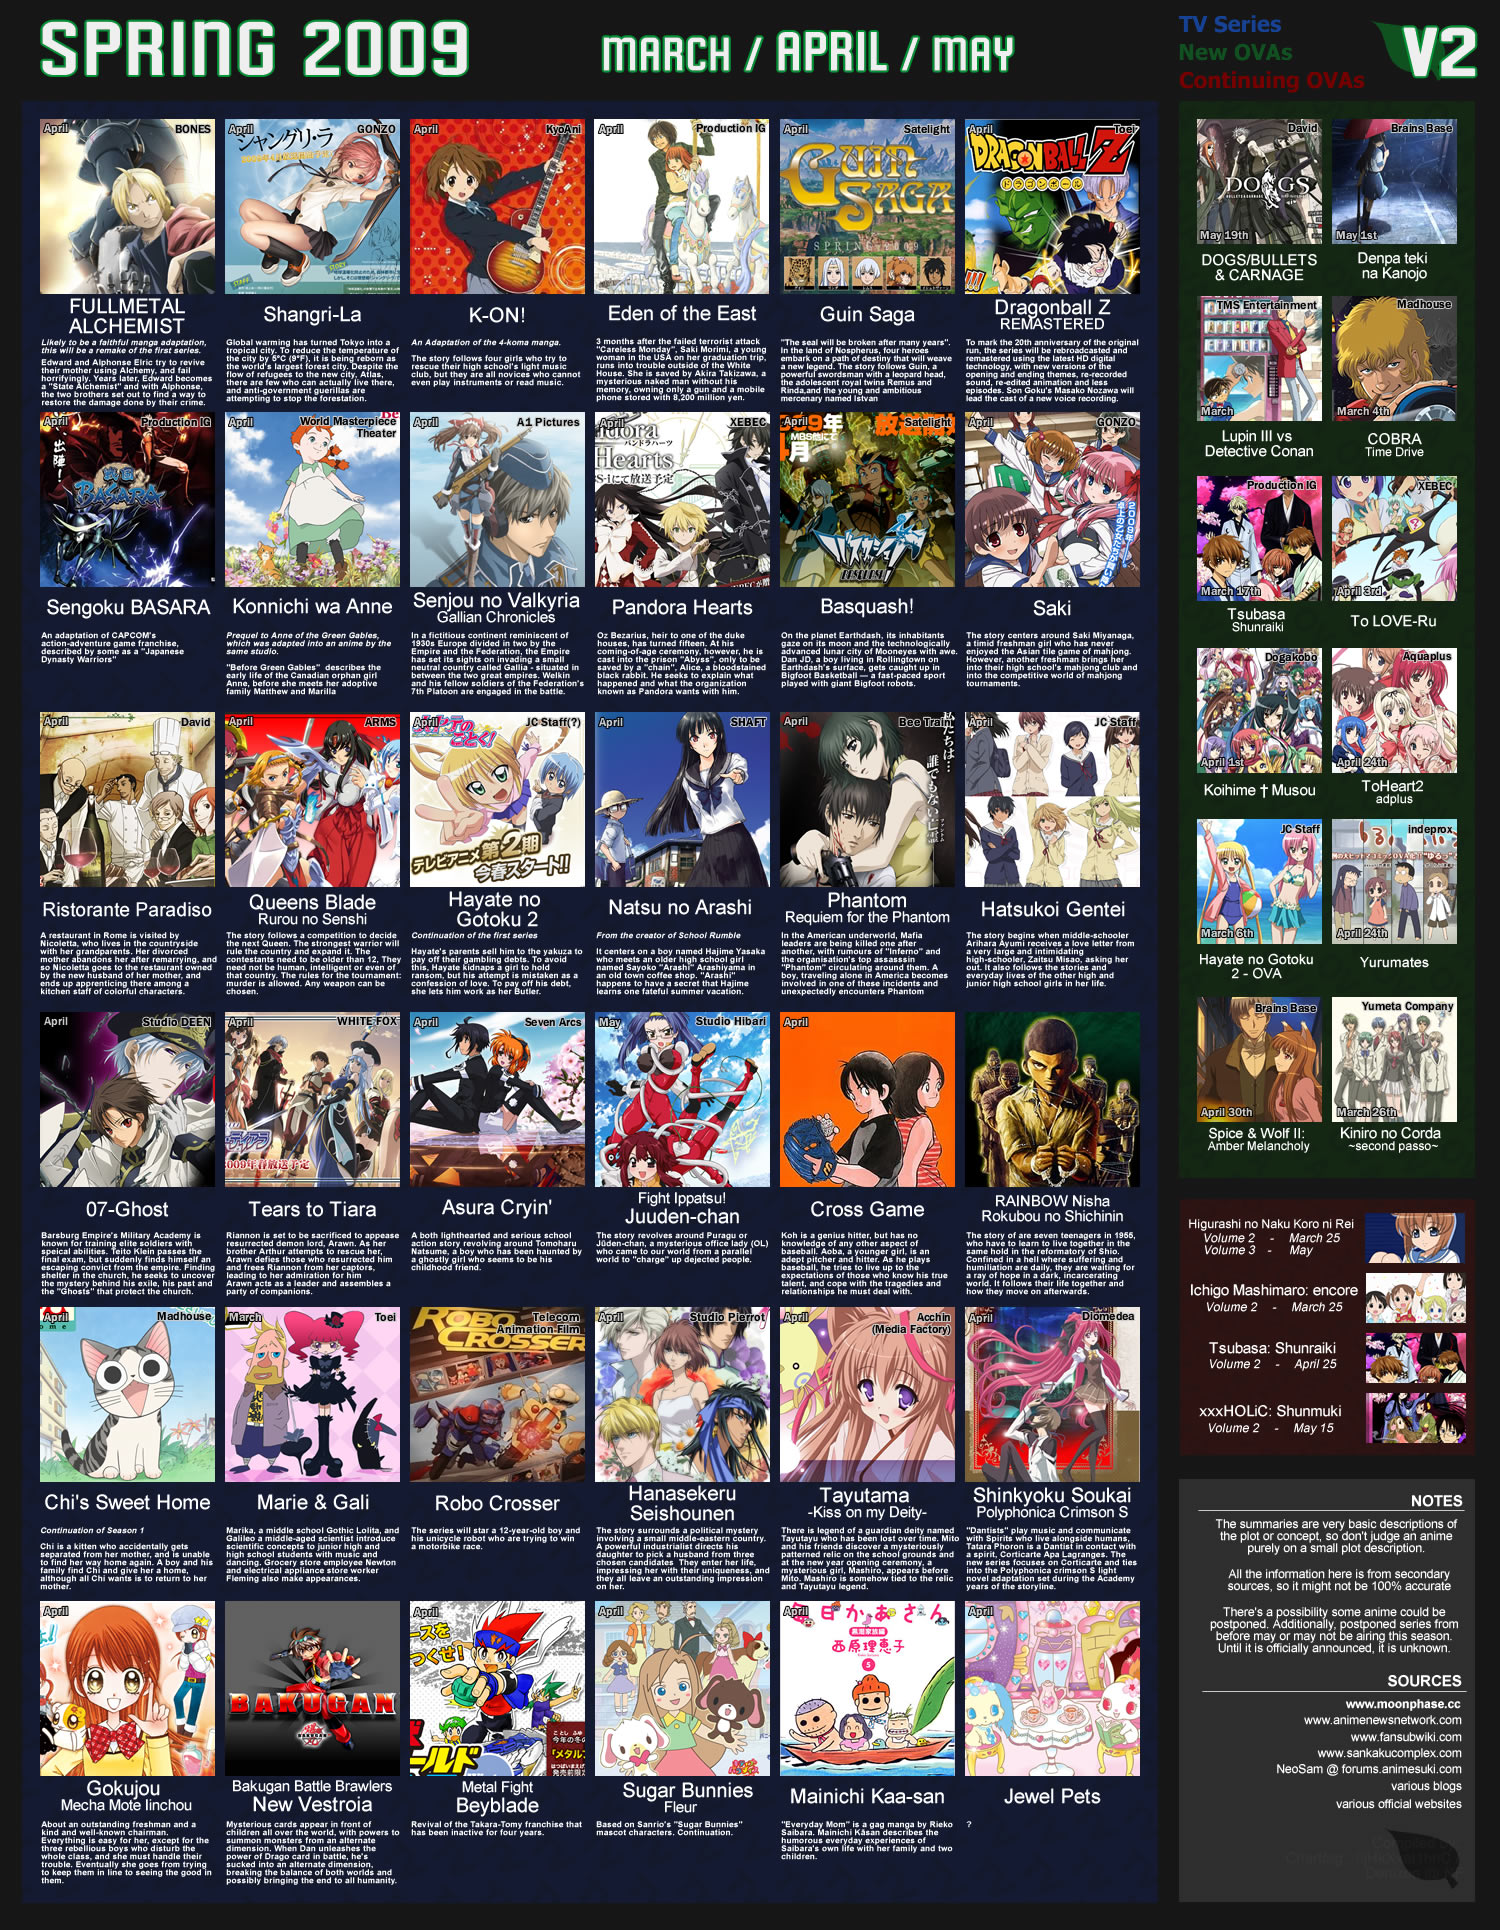 Pin by 오렌지 28 on anime | Best anime shows, Anime character design, Manga  anime